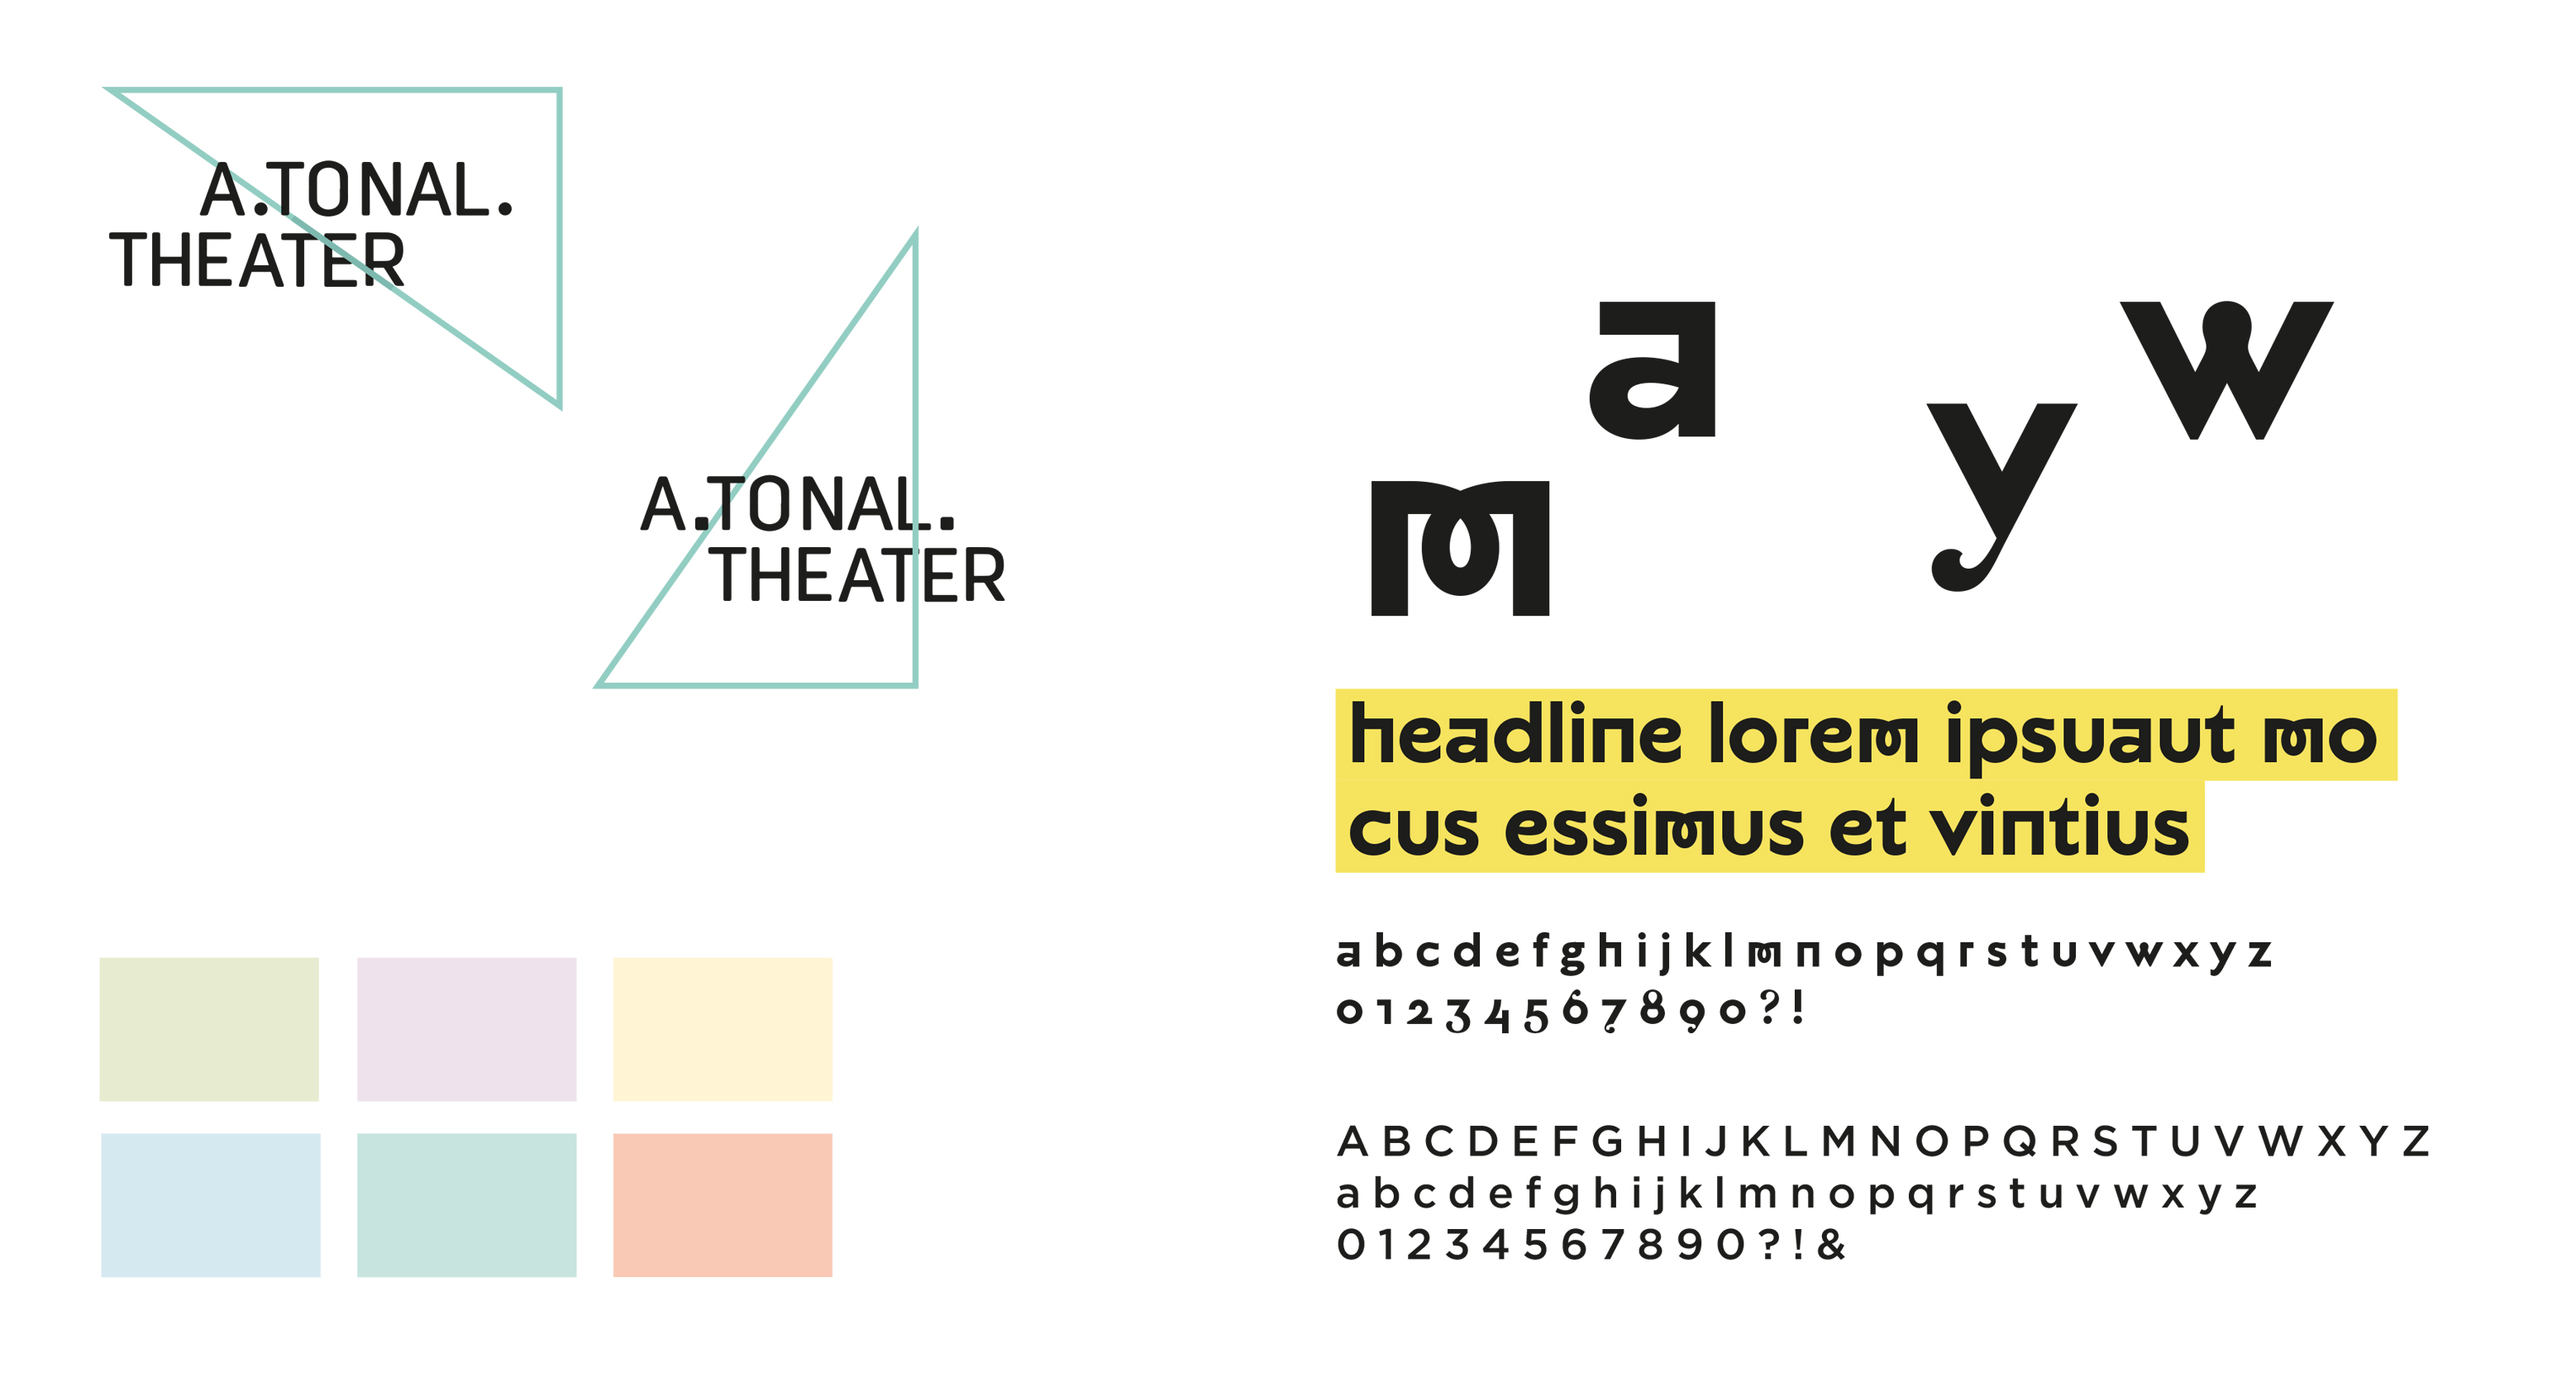 A.Tonal Theater, Corporate Design